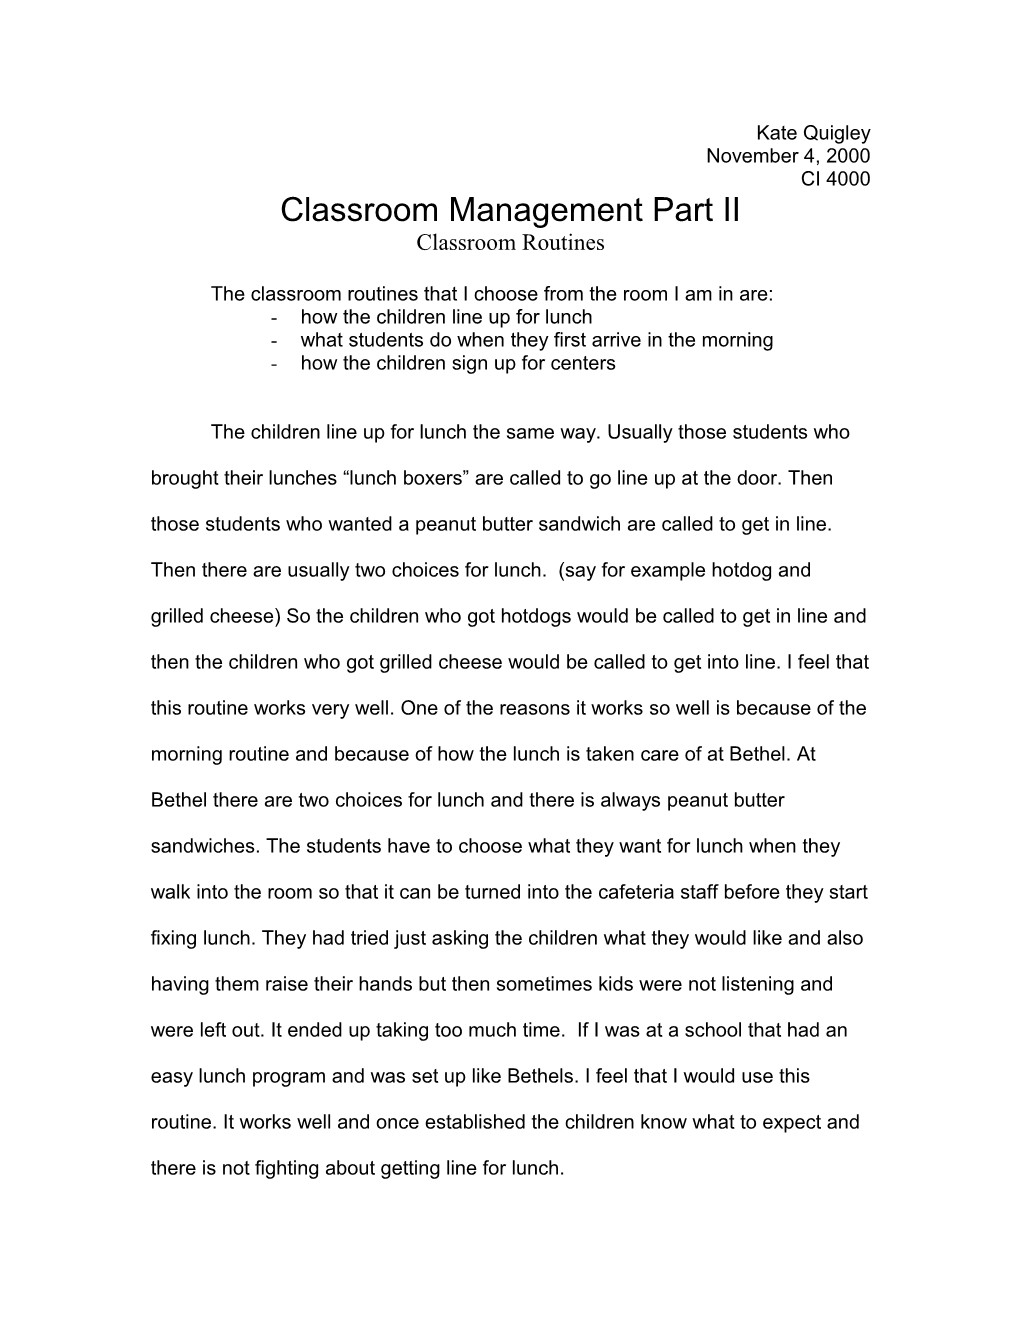 Classroom Management Part II